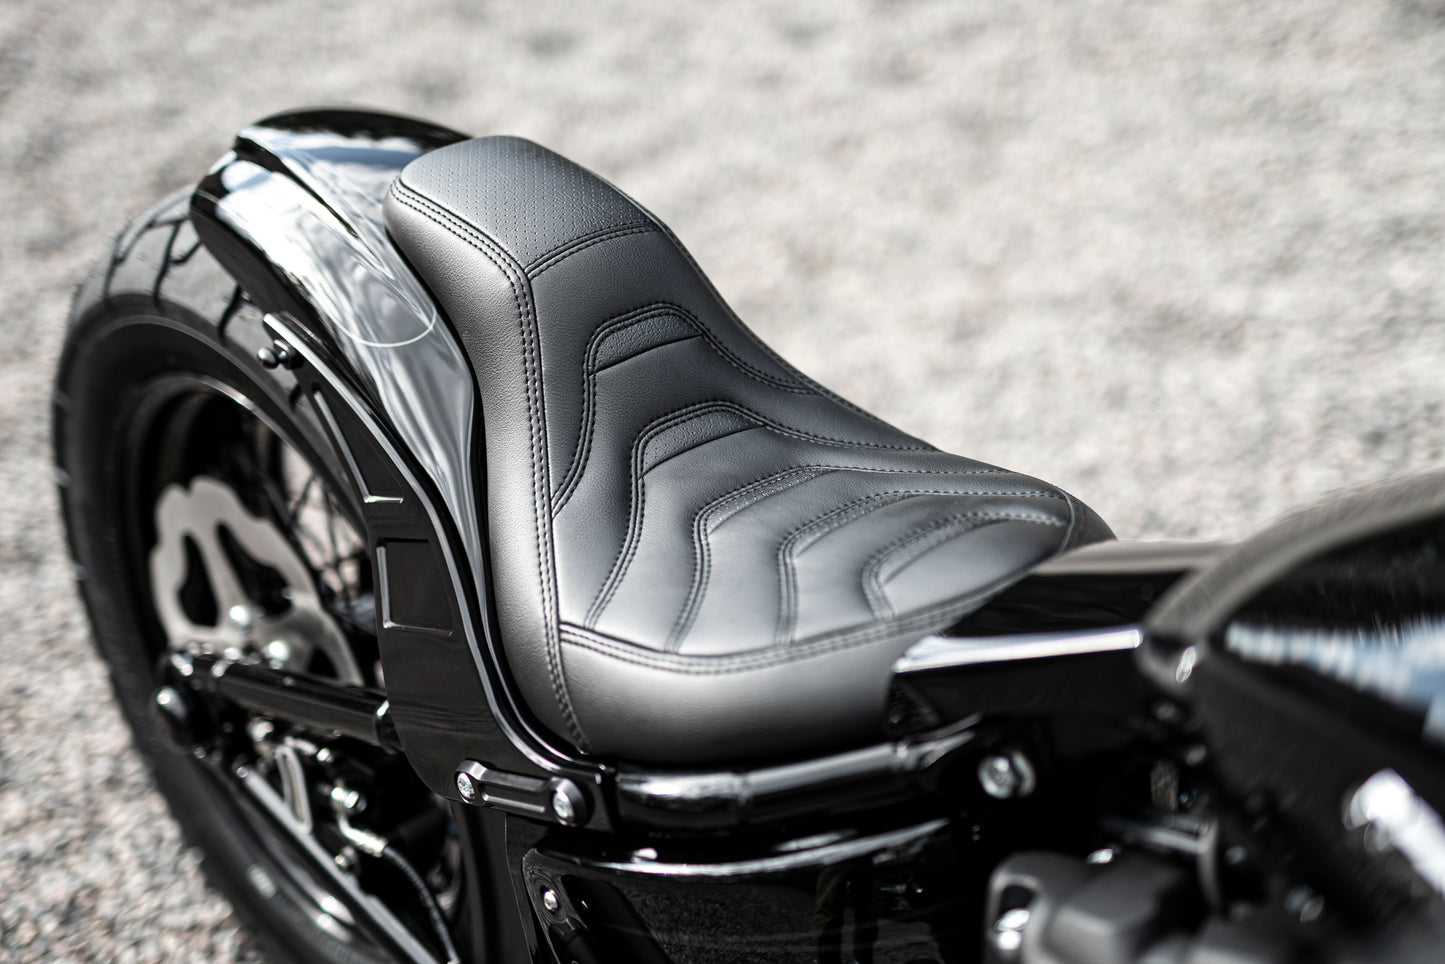 Zoomed Harley Davidson motorcycle with Killer Custom "Predator" seat 